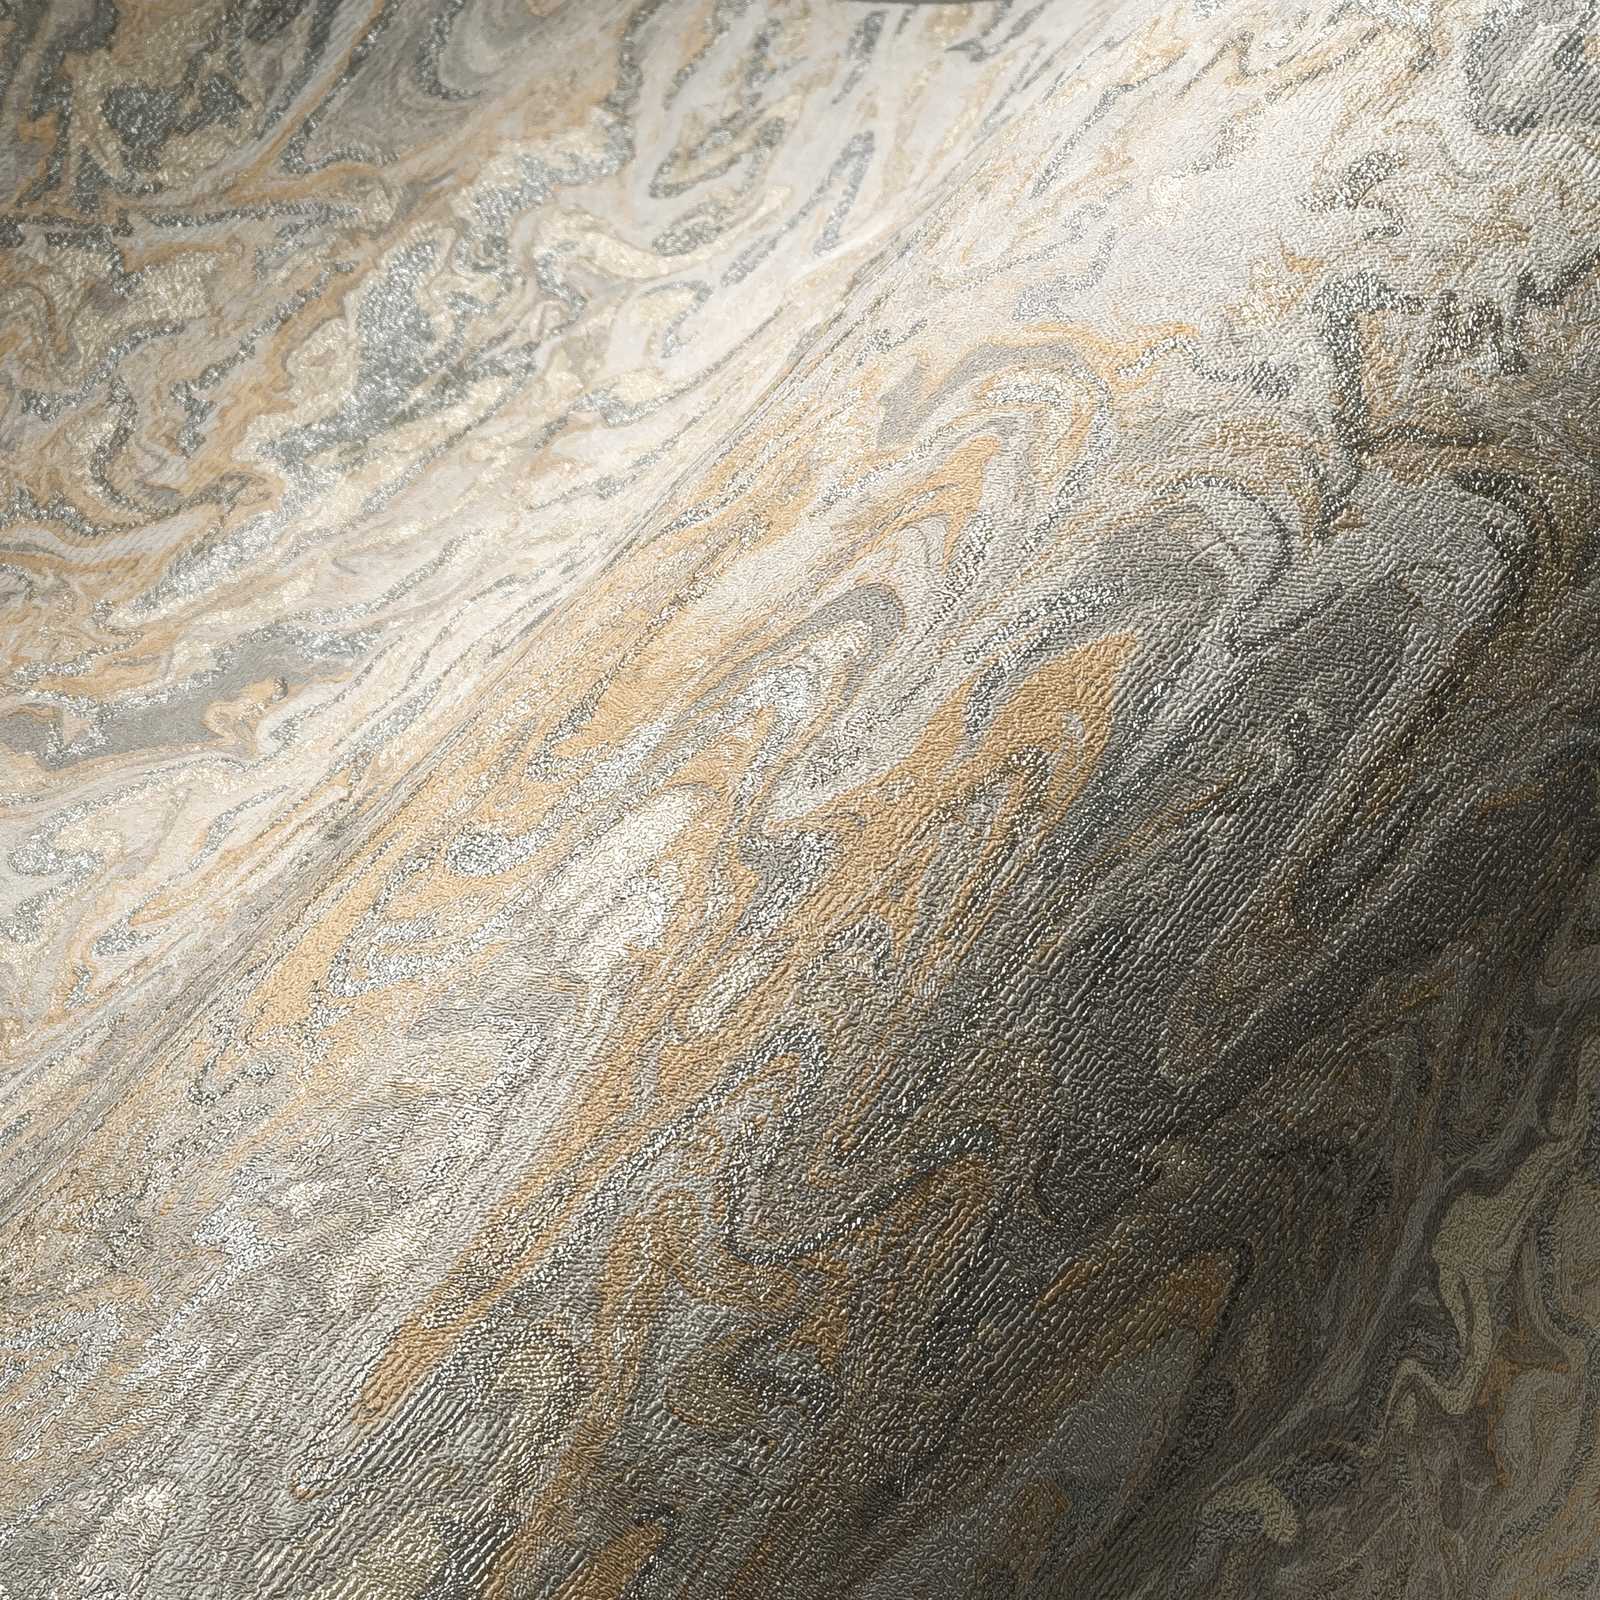             Marbled wallpaper abstract design - beige, grey, cream
        